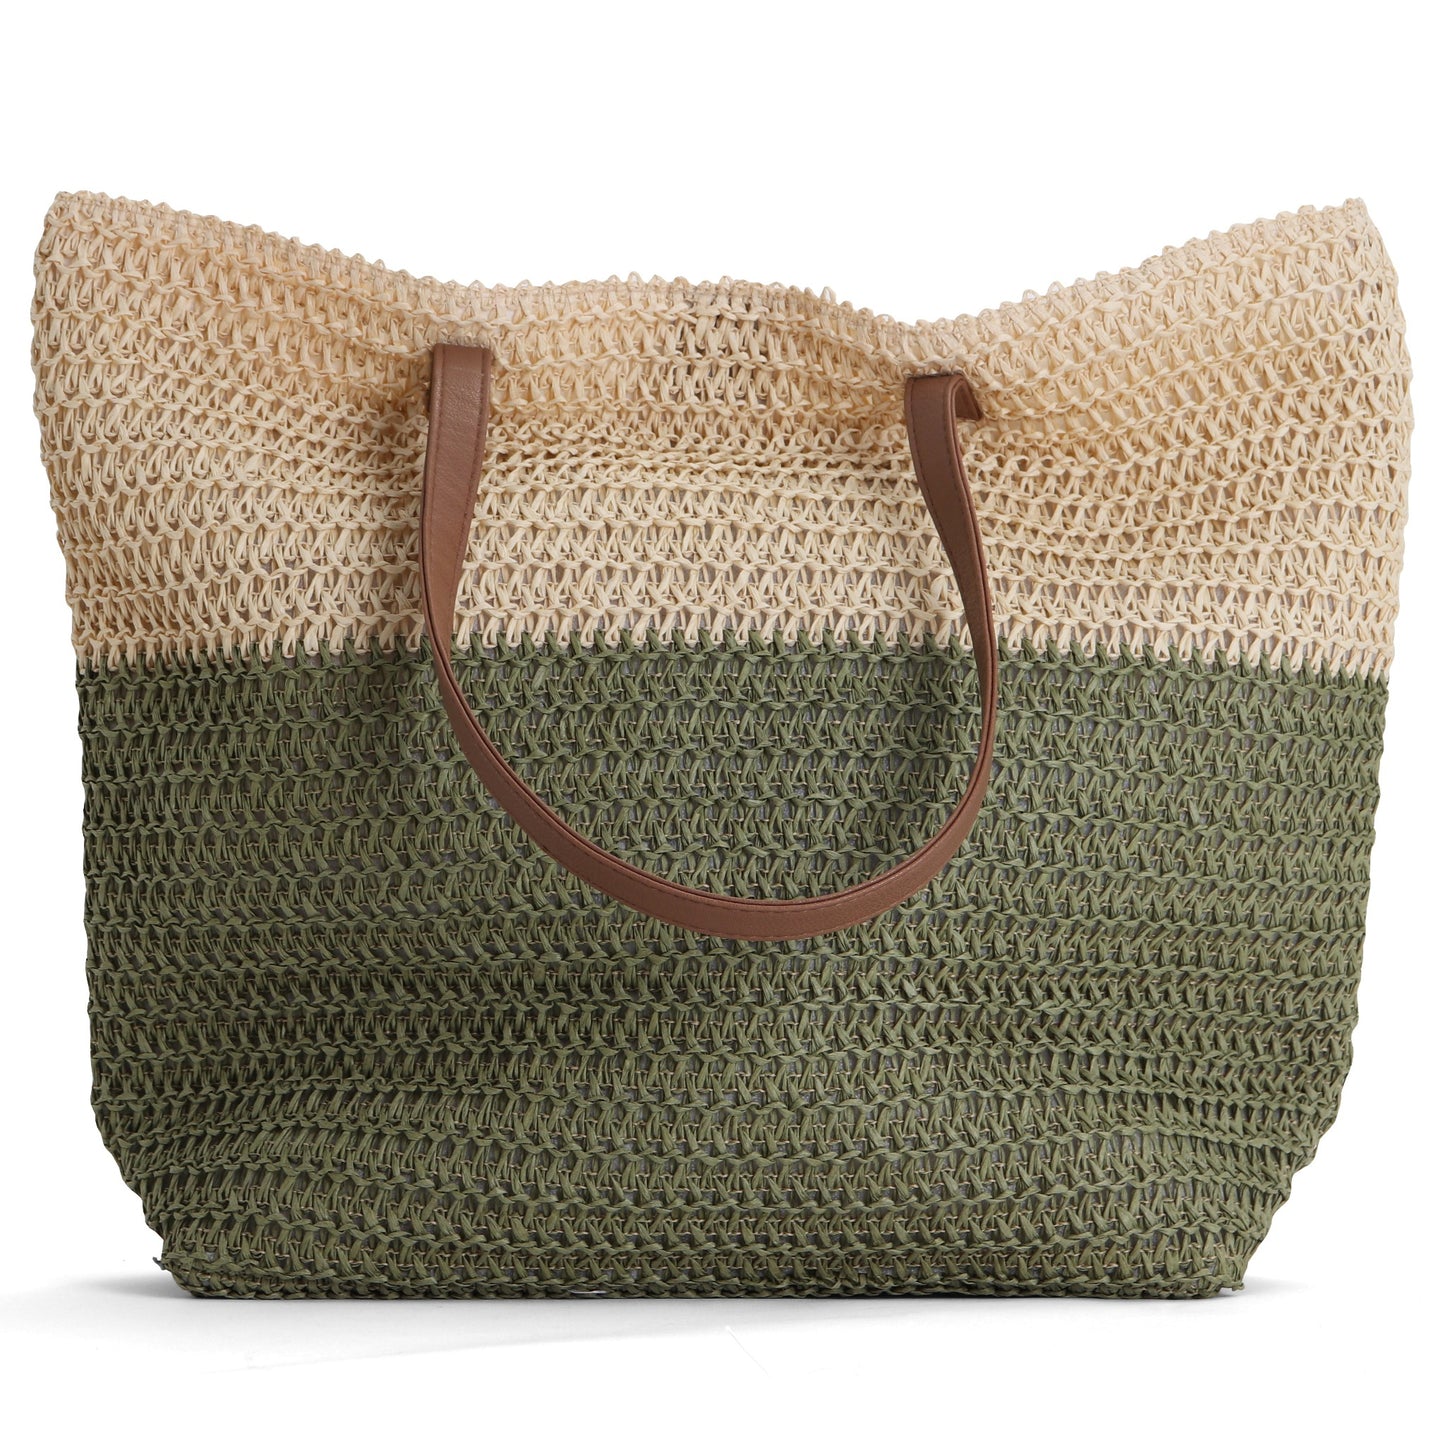 Beach Bag - Straw Bag - Large Tote Bag - Sand / Green